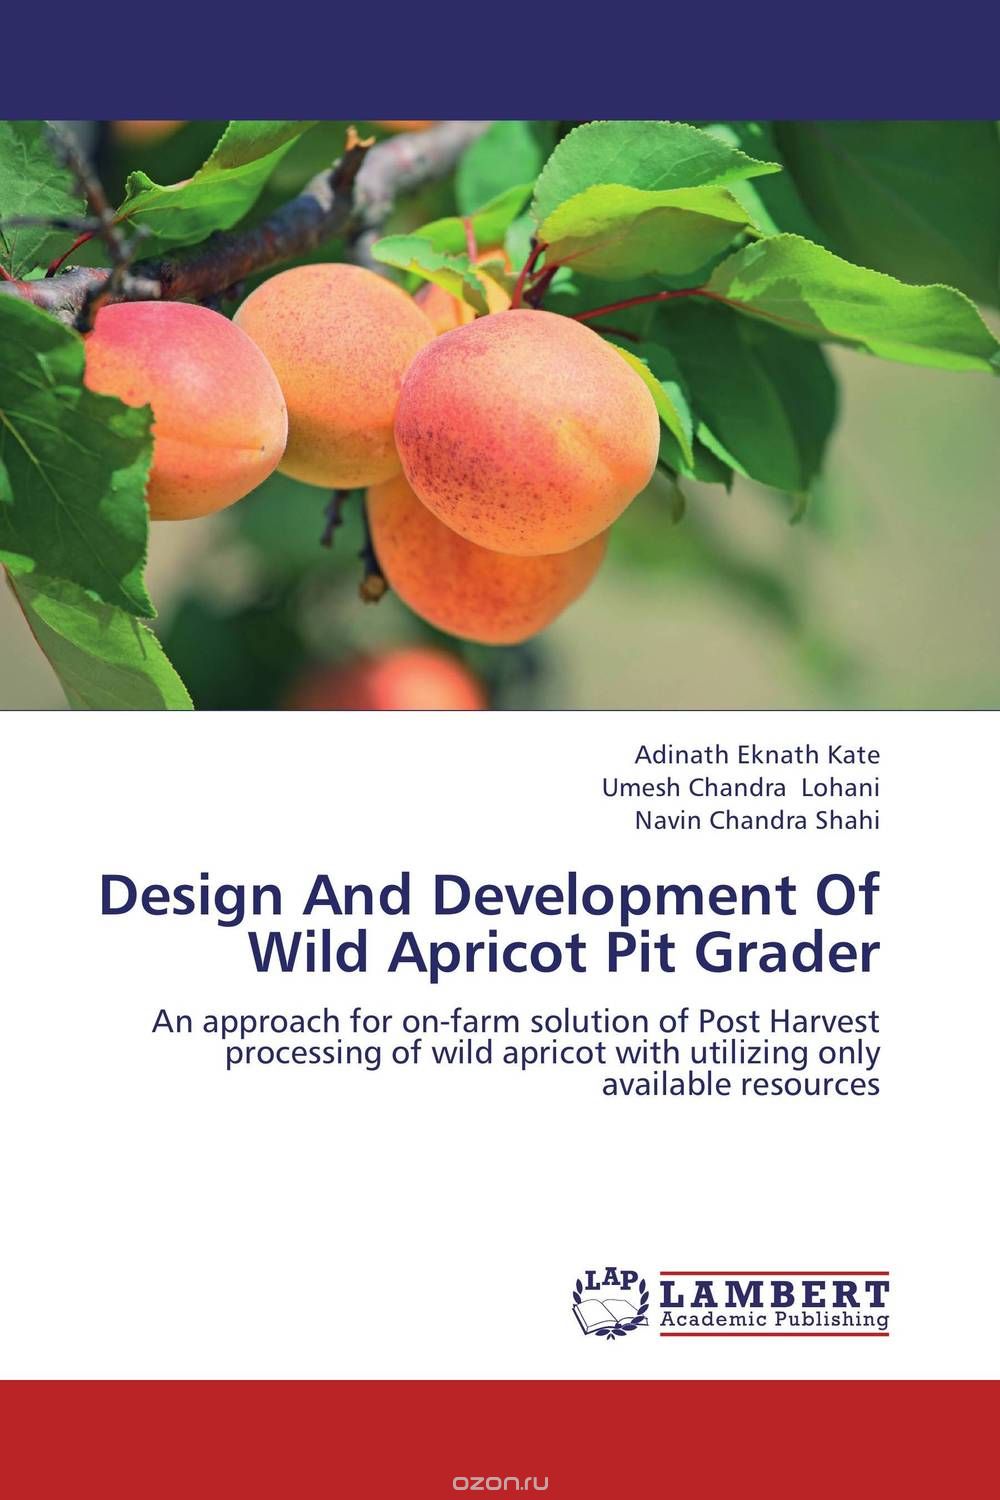 Скачать книгу "Design And Development Of Wild Apricot Pit Grader"